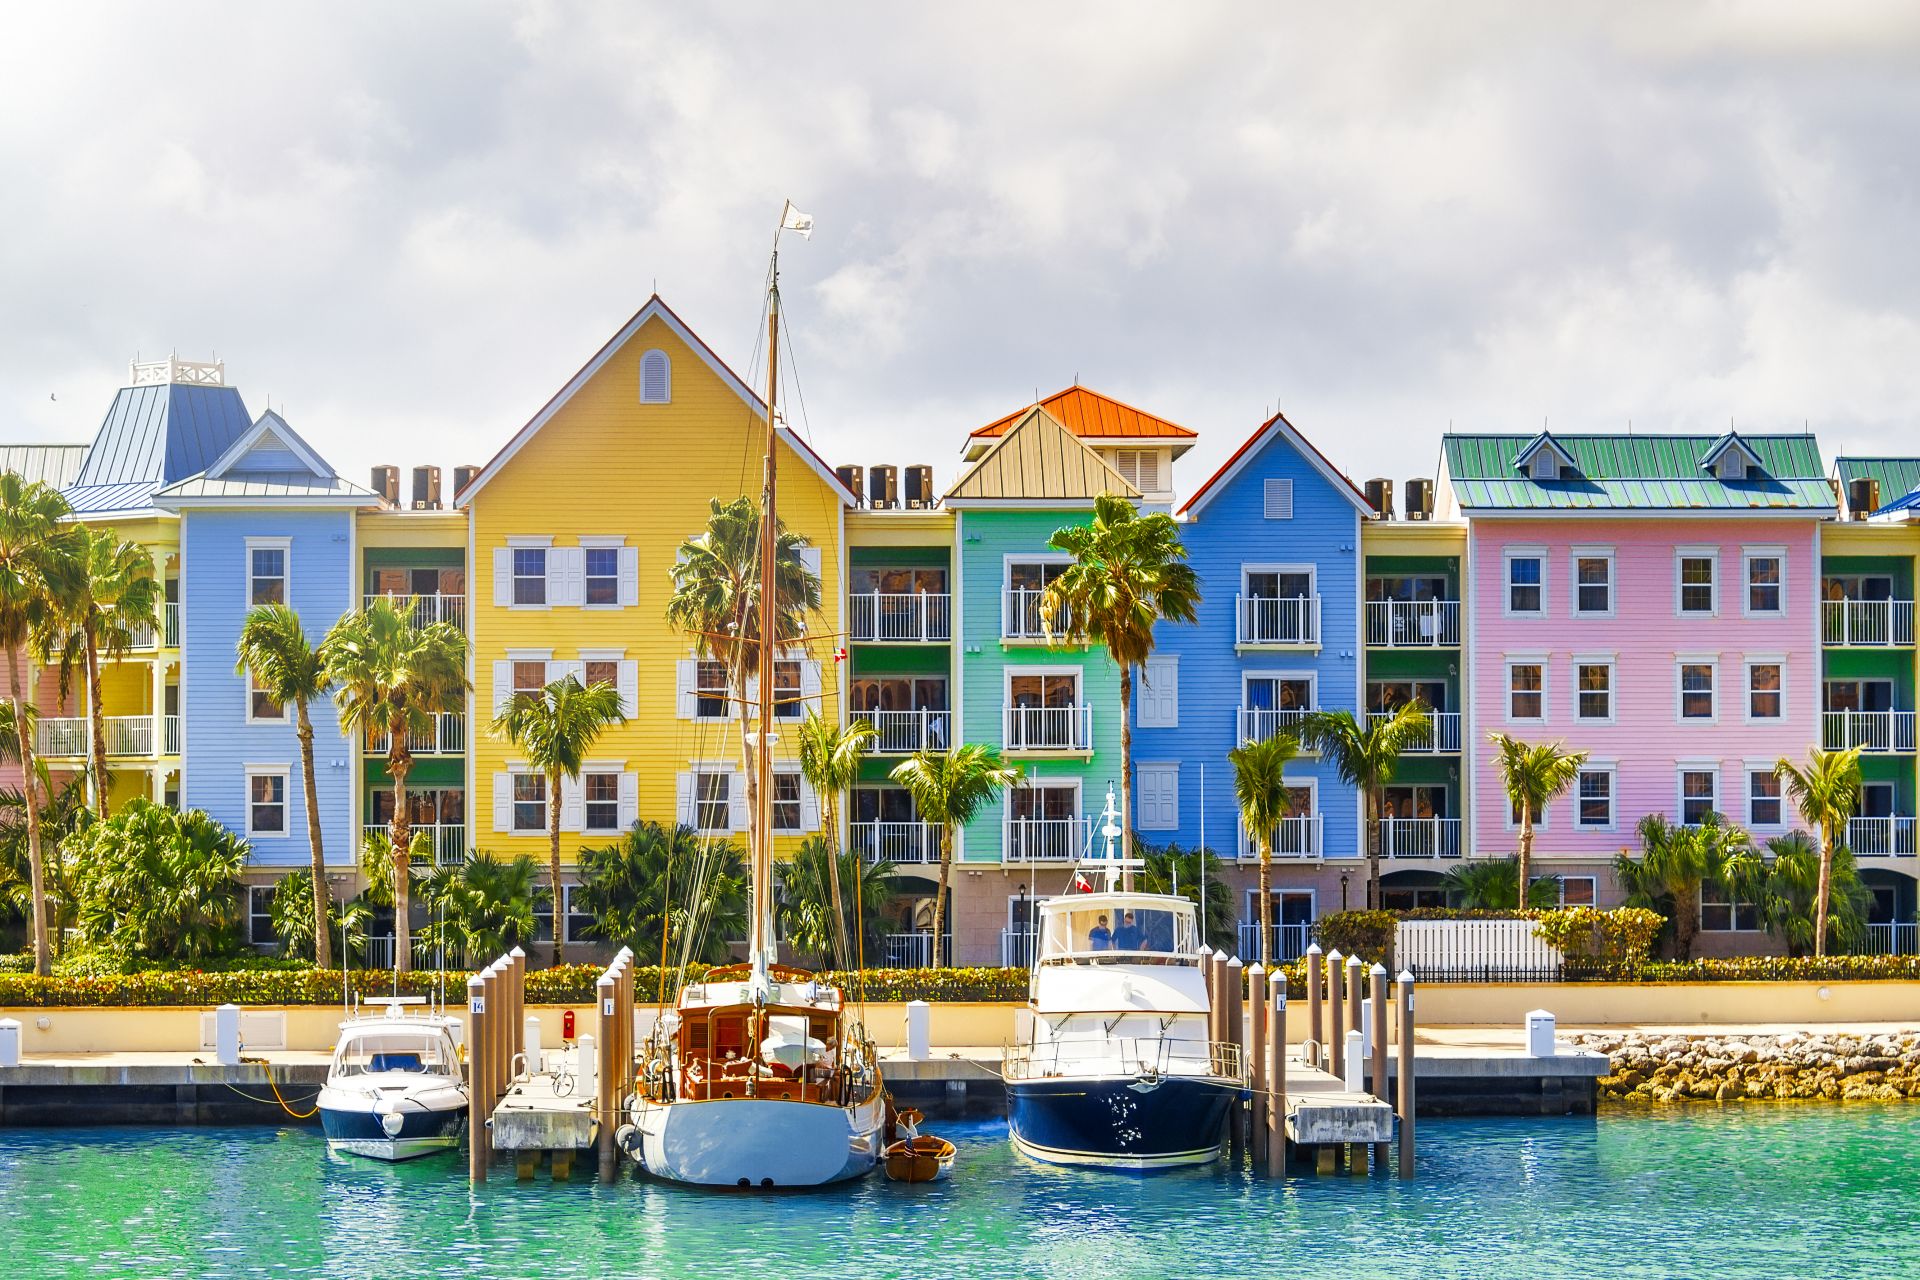 Colorful houses on the coast of Nassau, Bahamas.